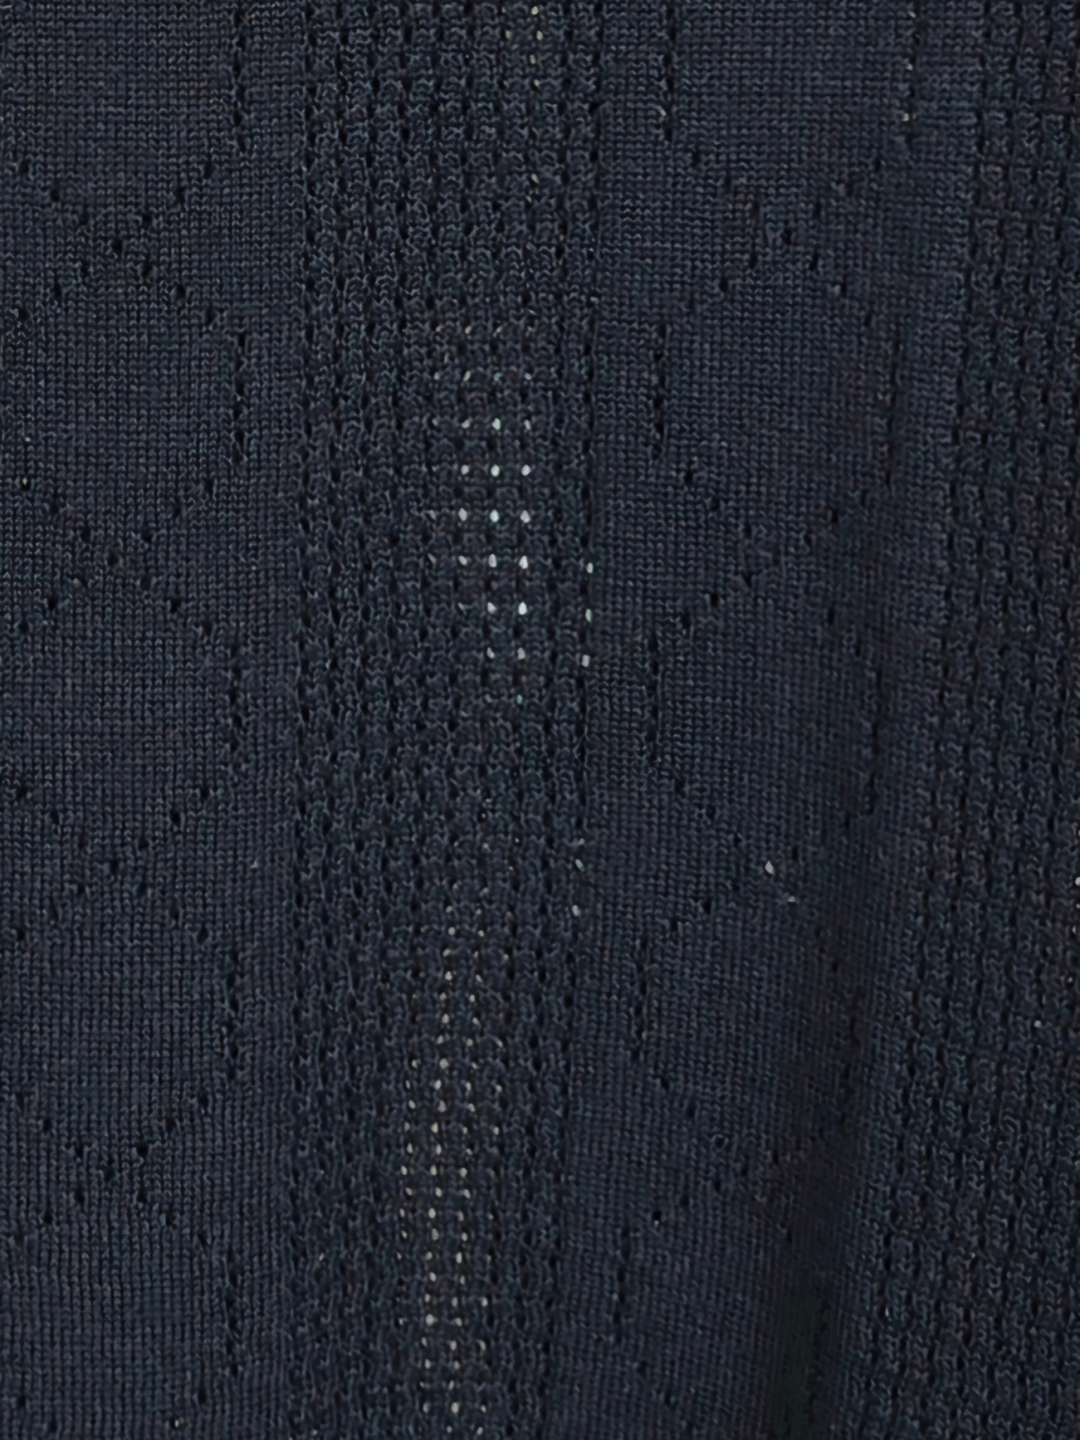 Mensoo Infinite Knit Button T Shirt Black